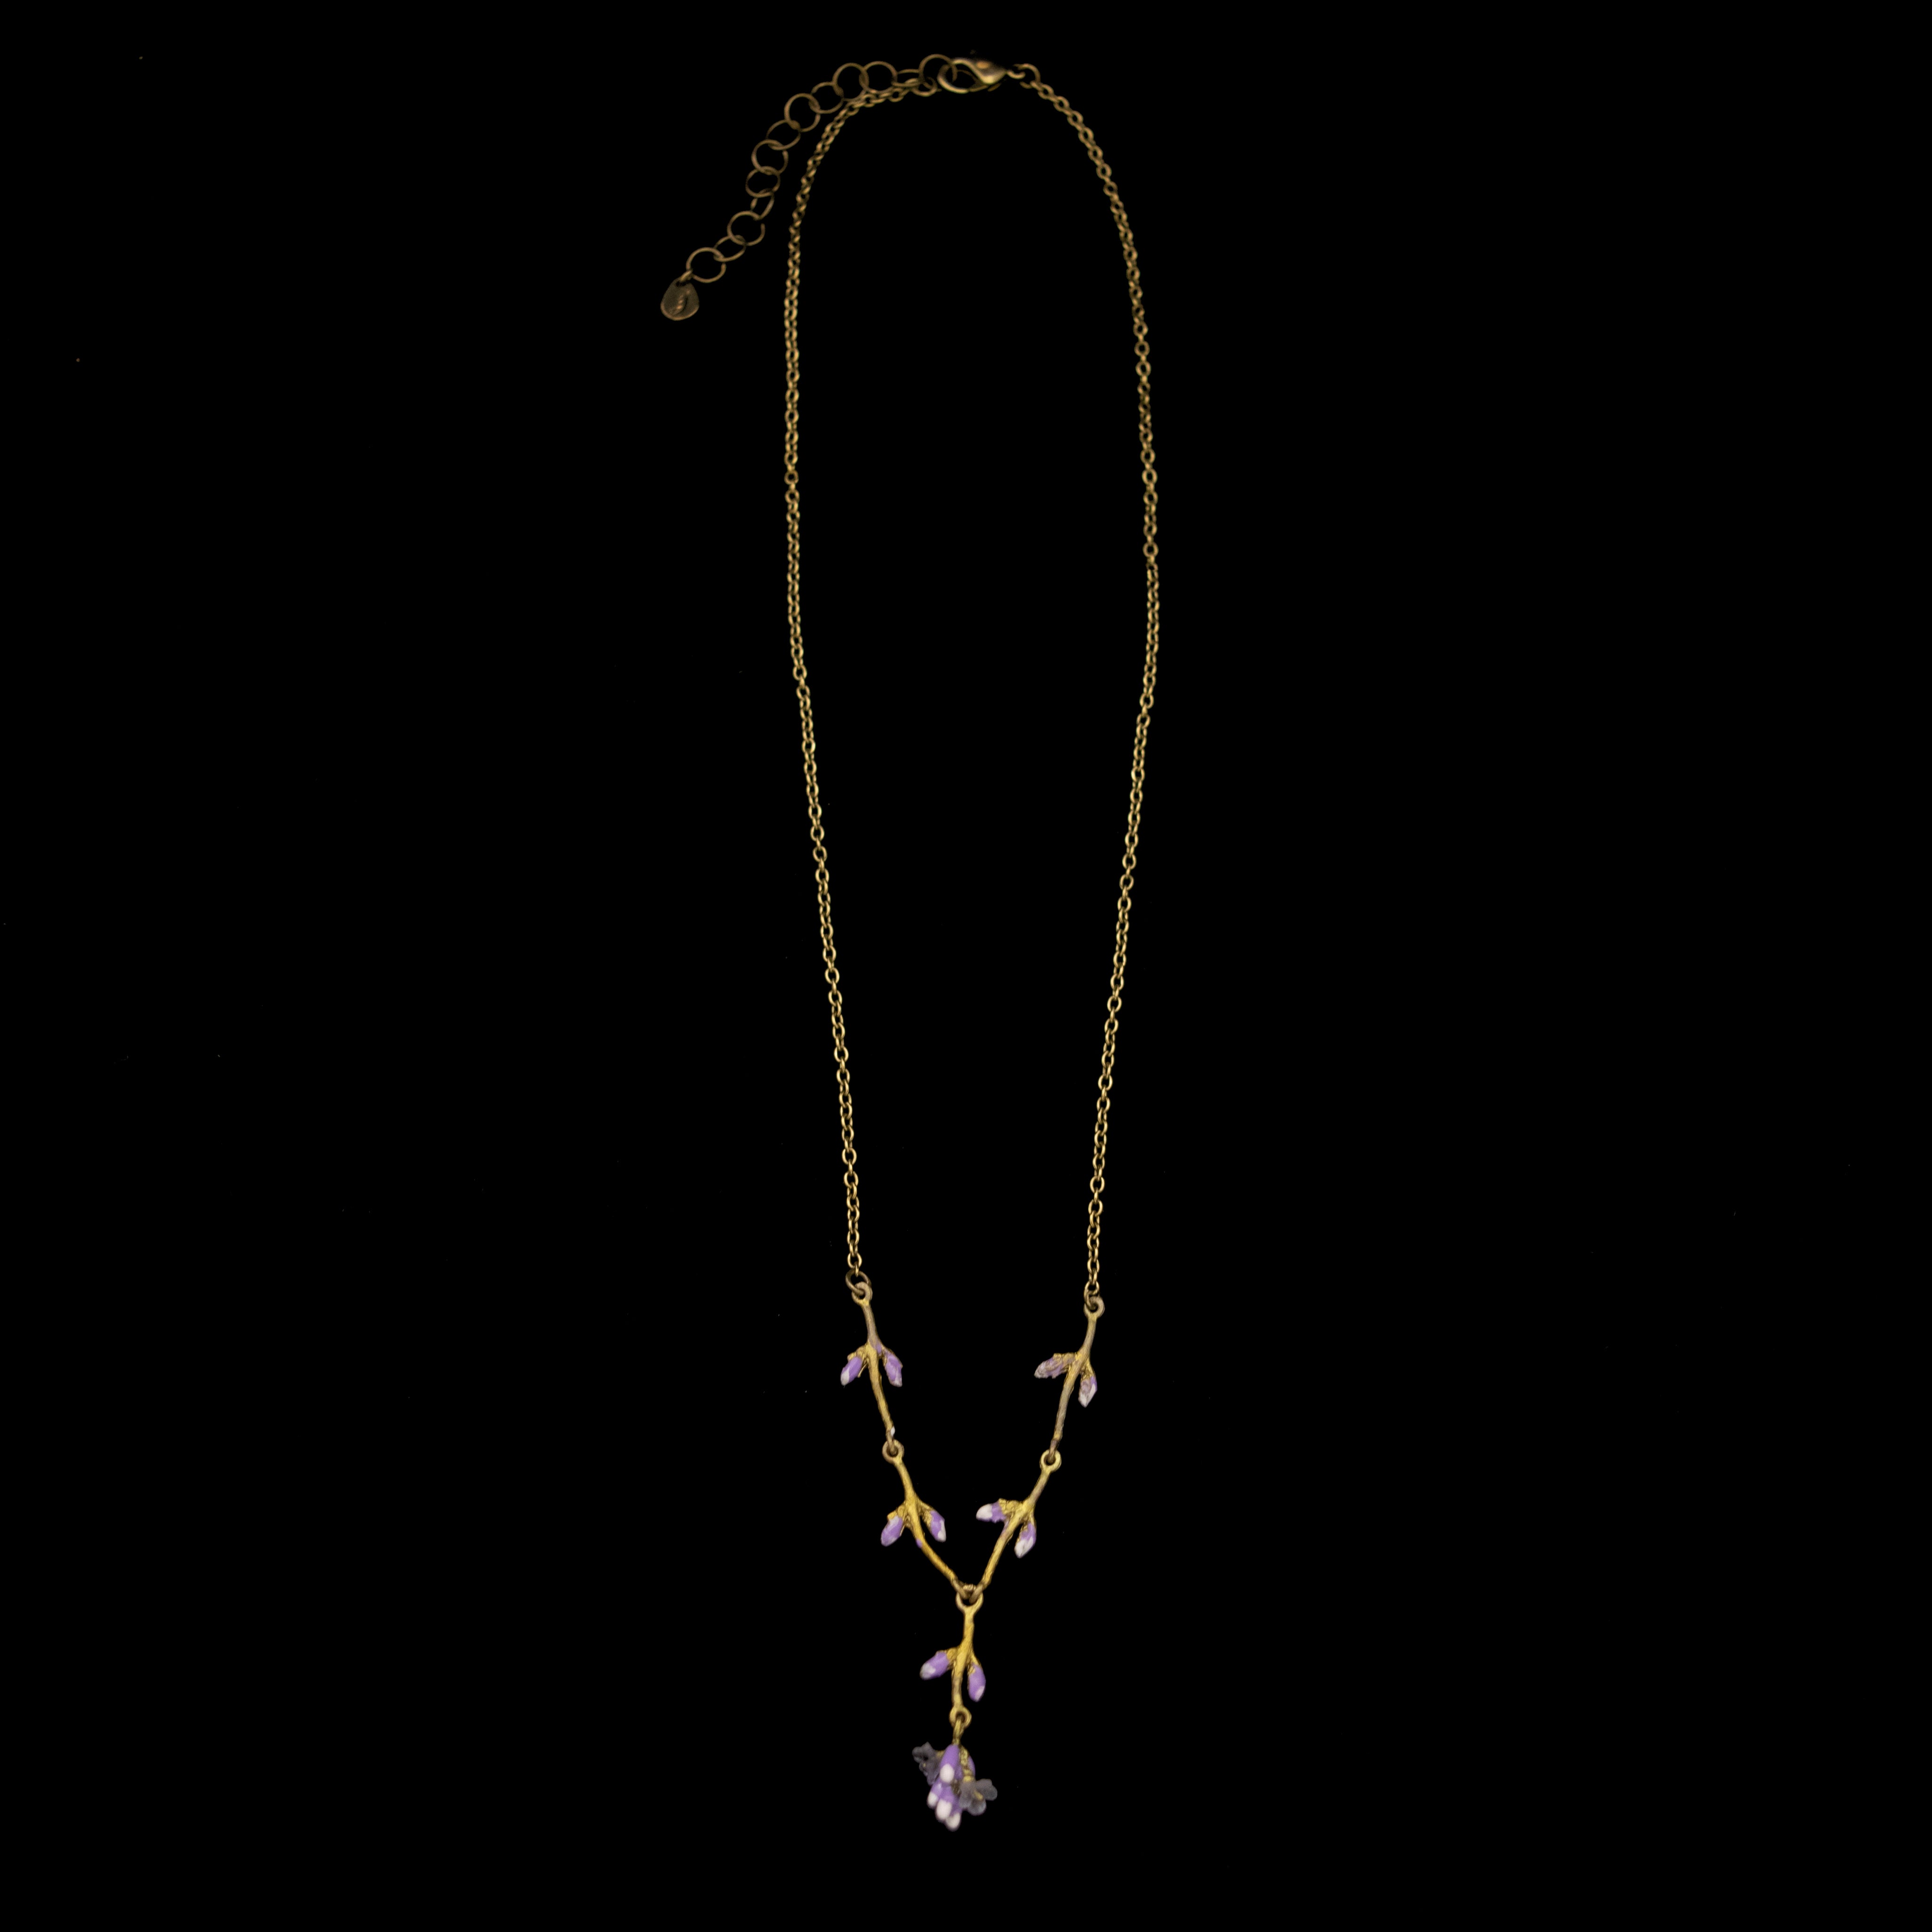 Lavender Necklace